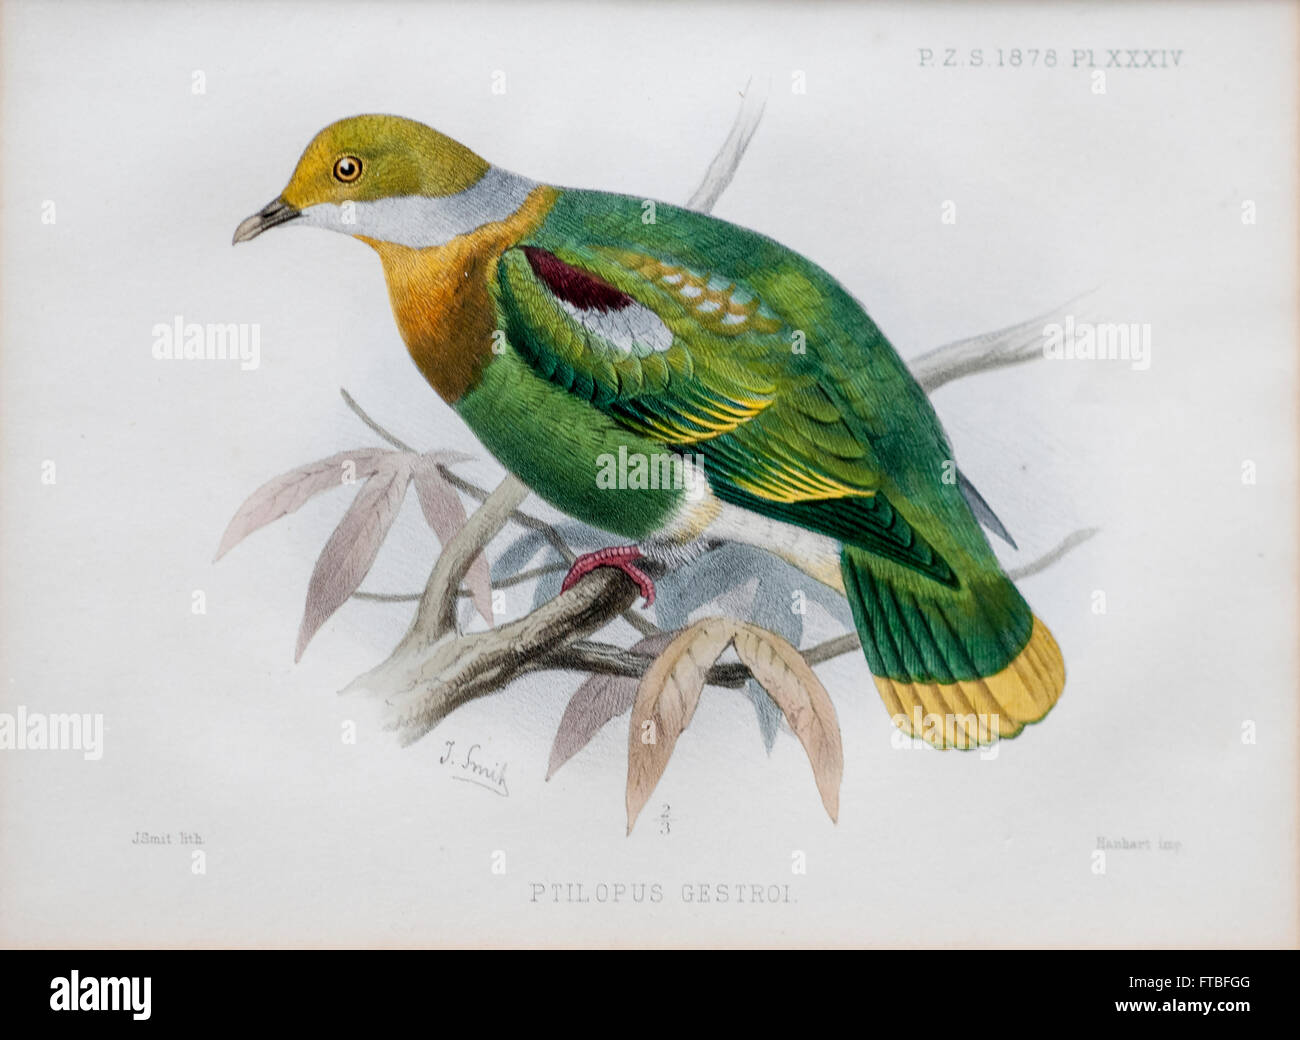 Illustration of Eastern Ornate Fruit-dove (ptilopus gestroi now Ptilinopus gestroi) from 1878 Stock Photo